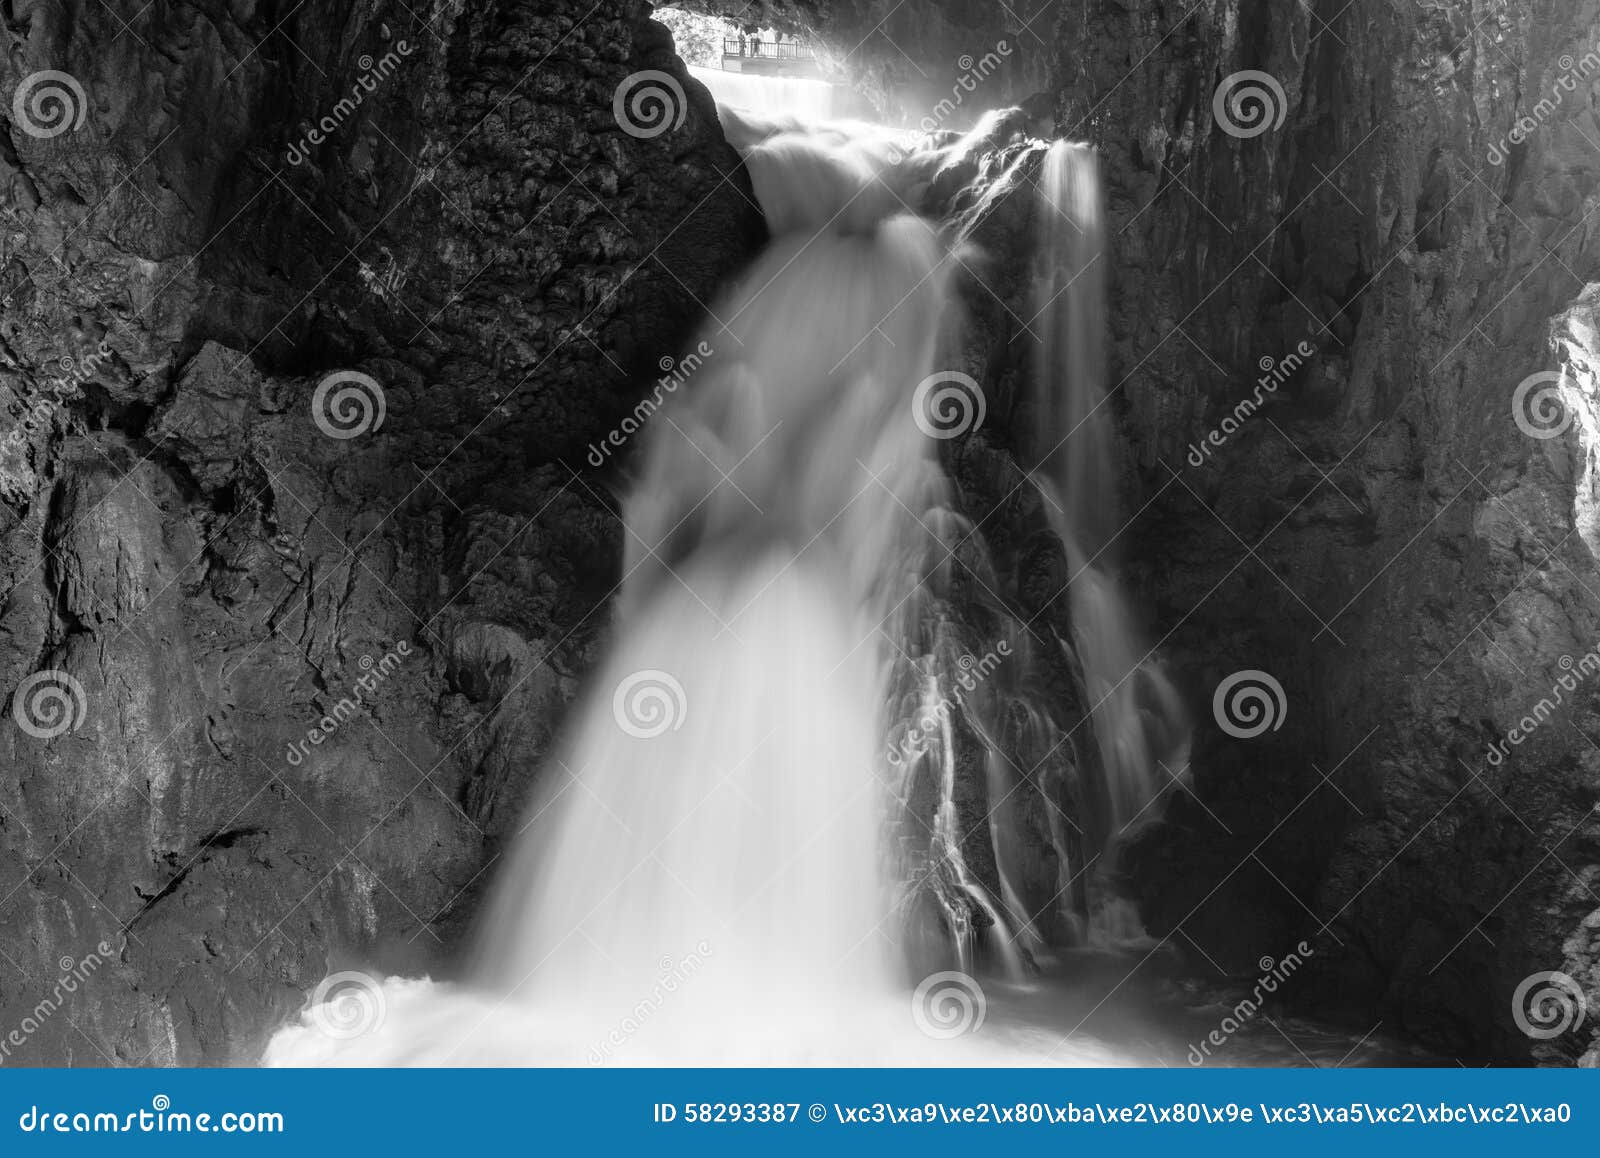 Longmen Waterfall Stock Photos Free And Royalty Free Stock Photos From